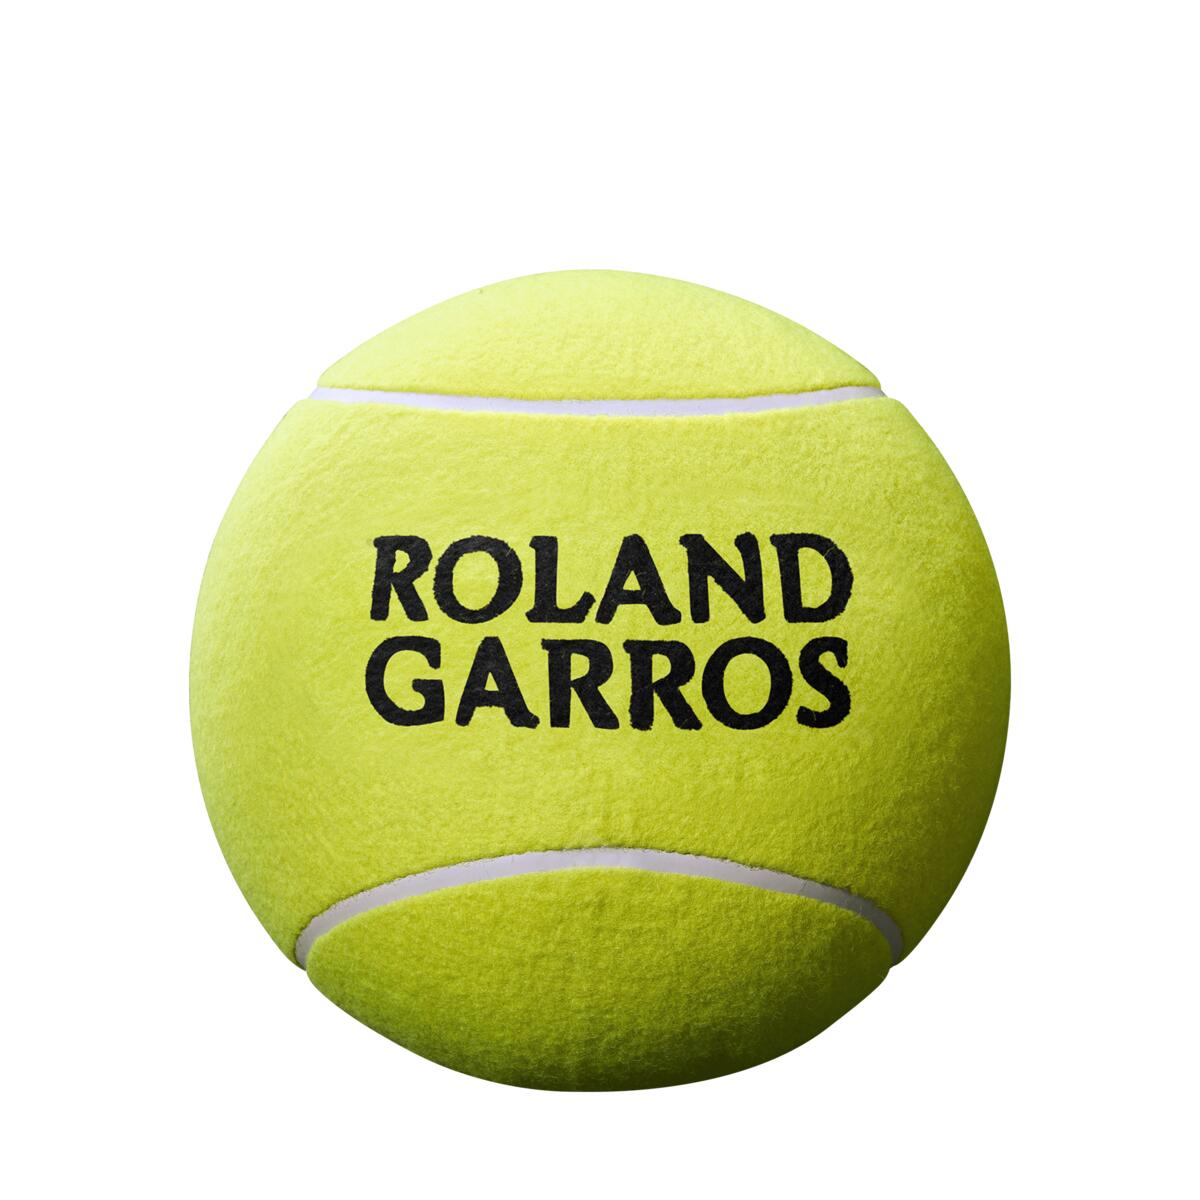 Jumbo Balle souvenir Wilson x Roland Garros - jaune